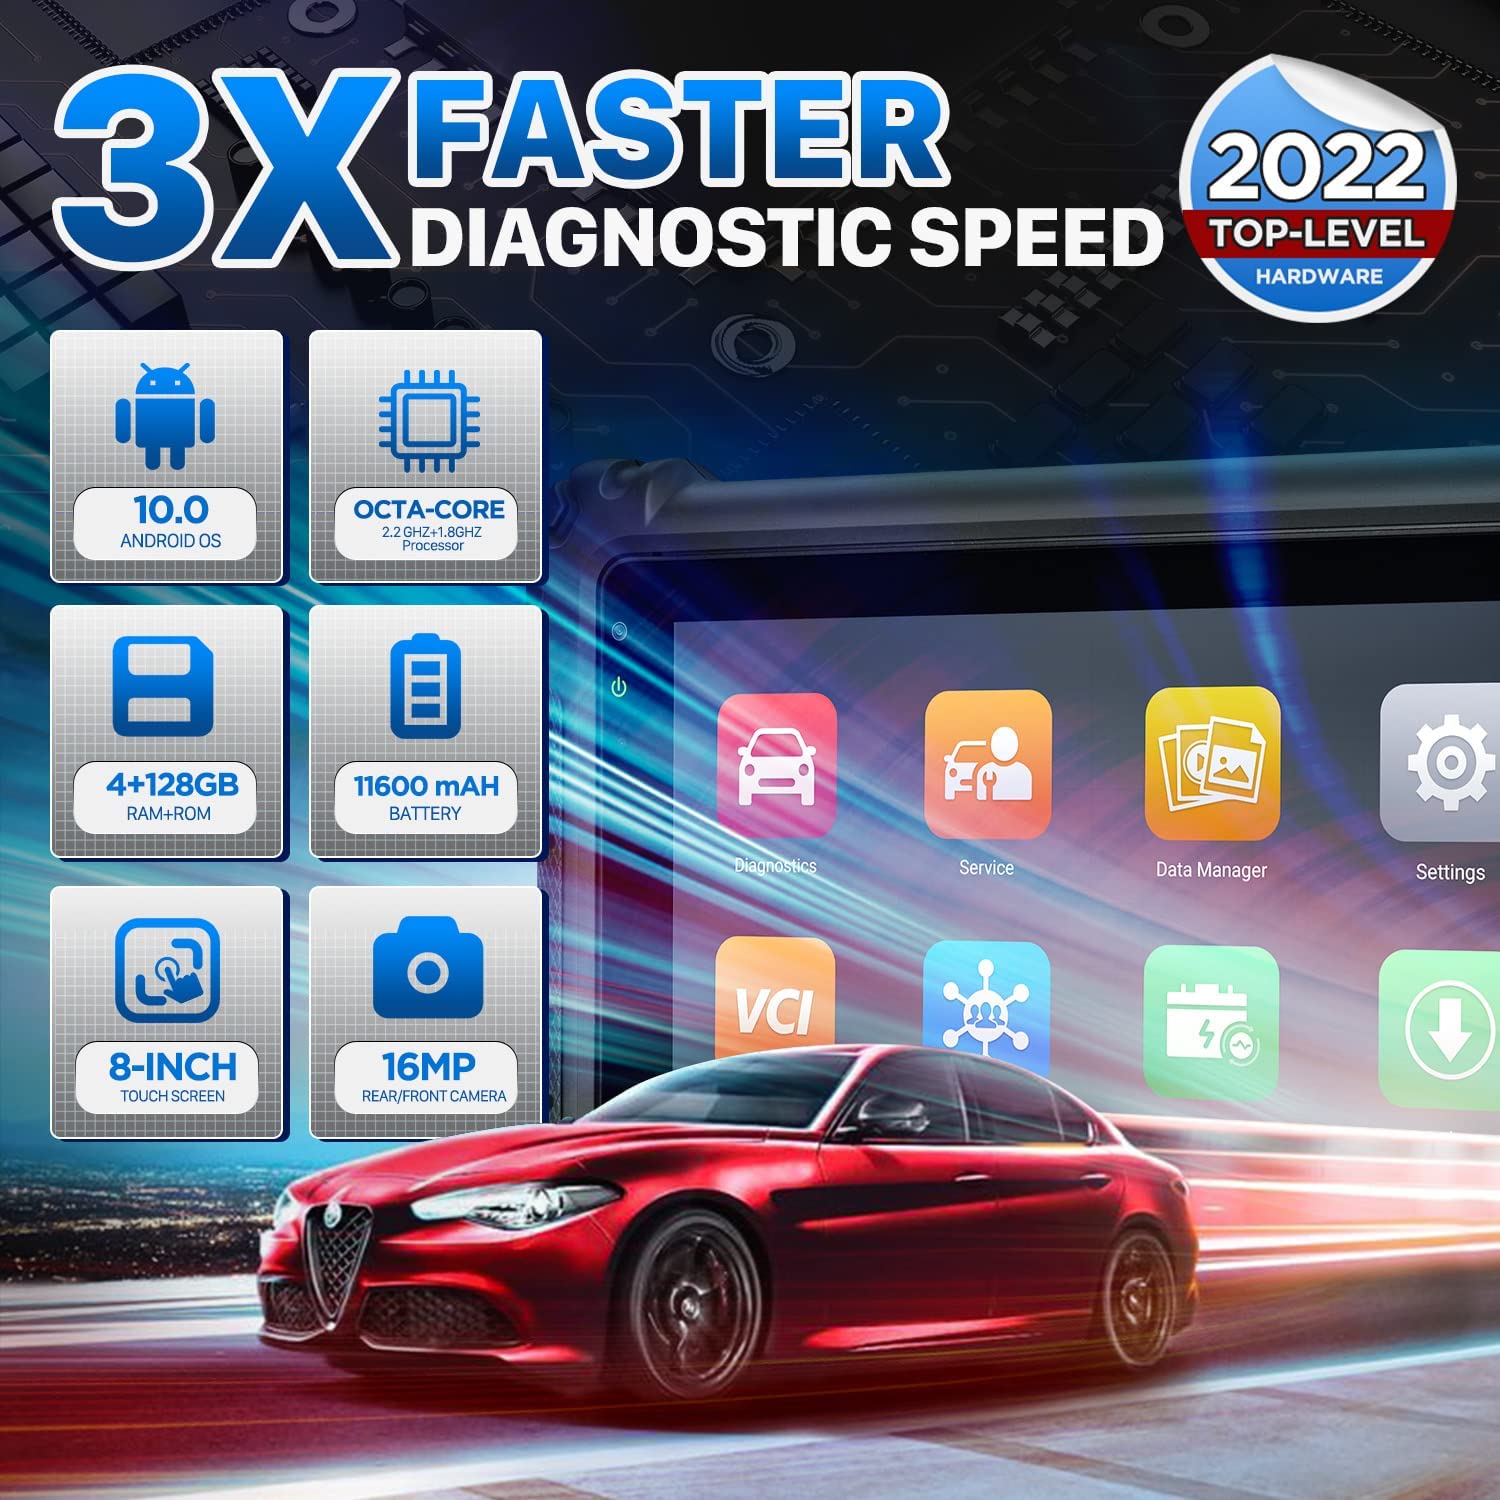 Autel MK906 Pro is 3X faster diagnostic tool 